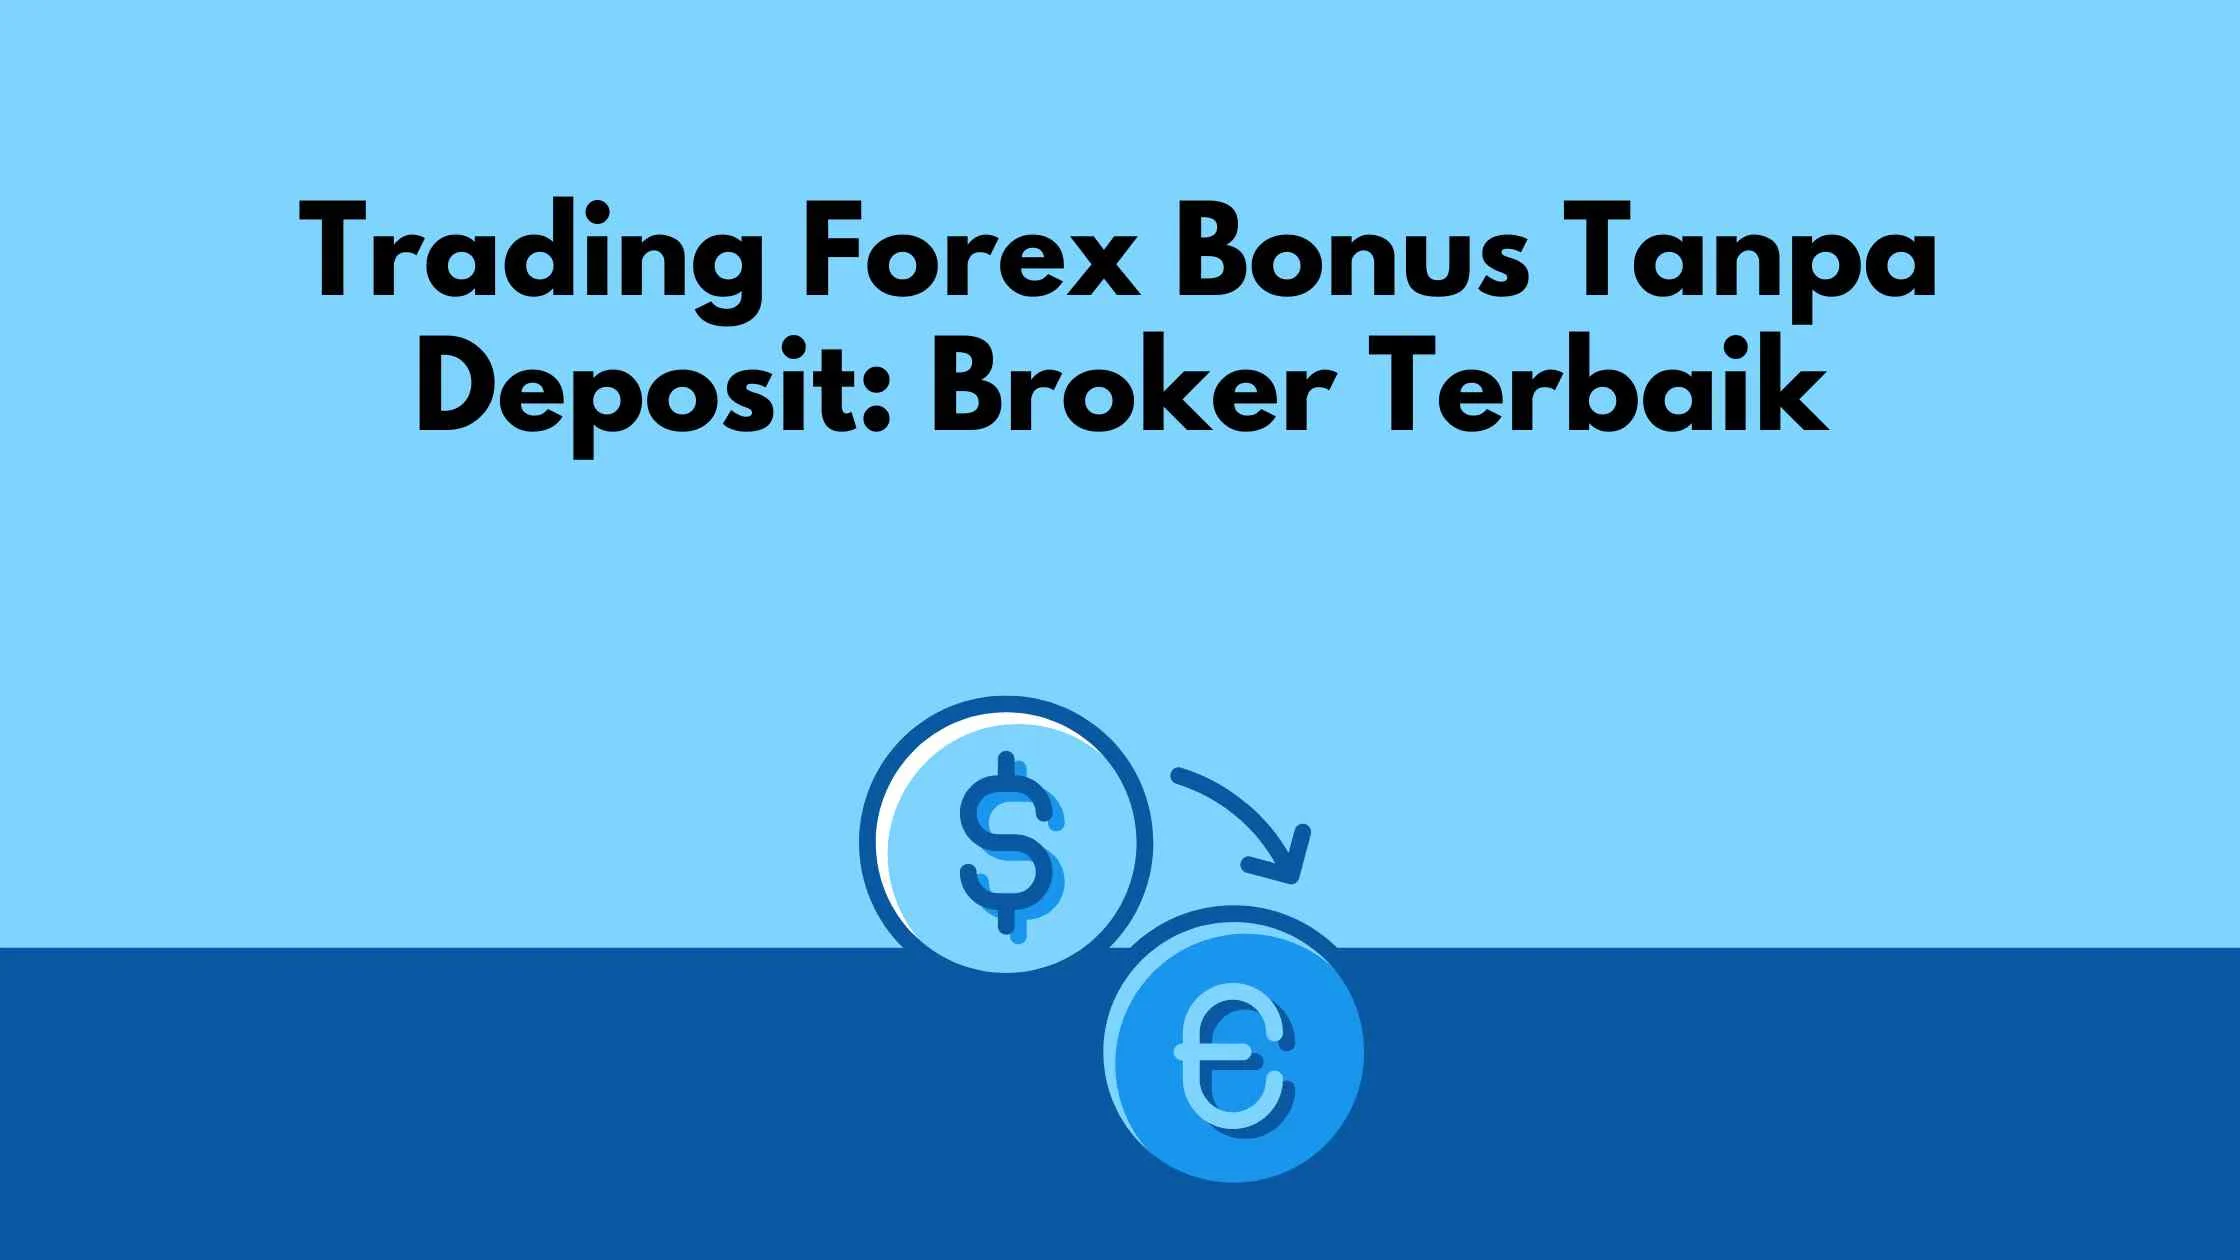 Trading Forex Bonus Tanpa Deposit: Broker Terbaik